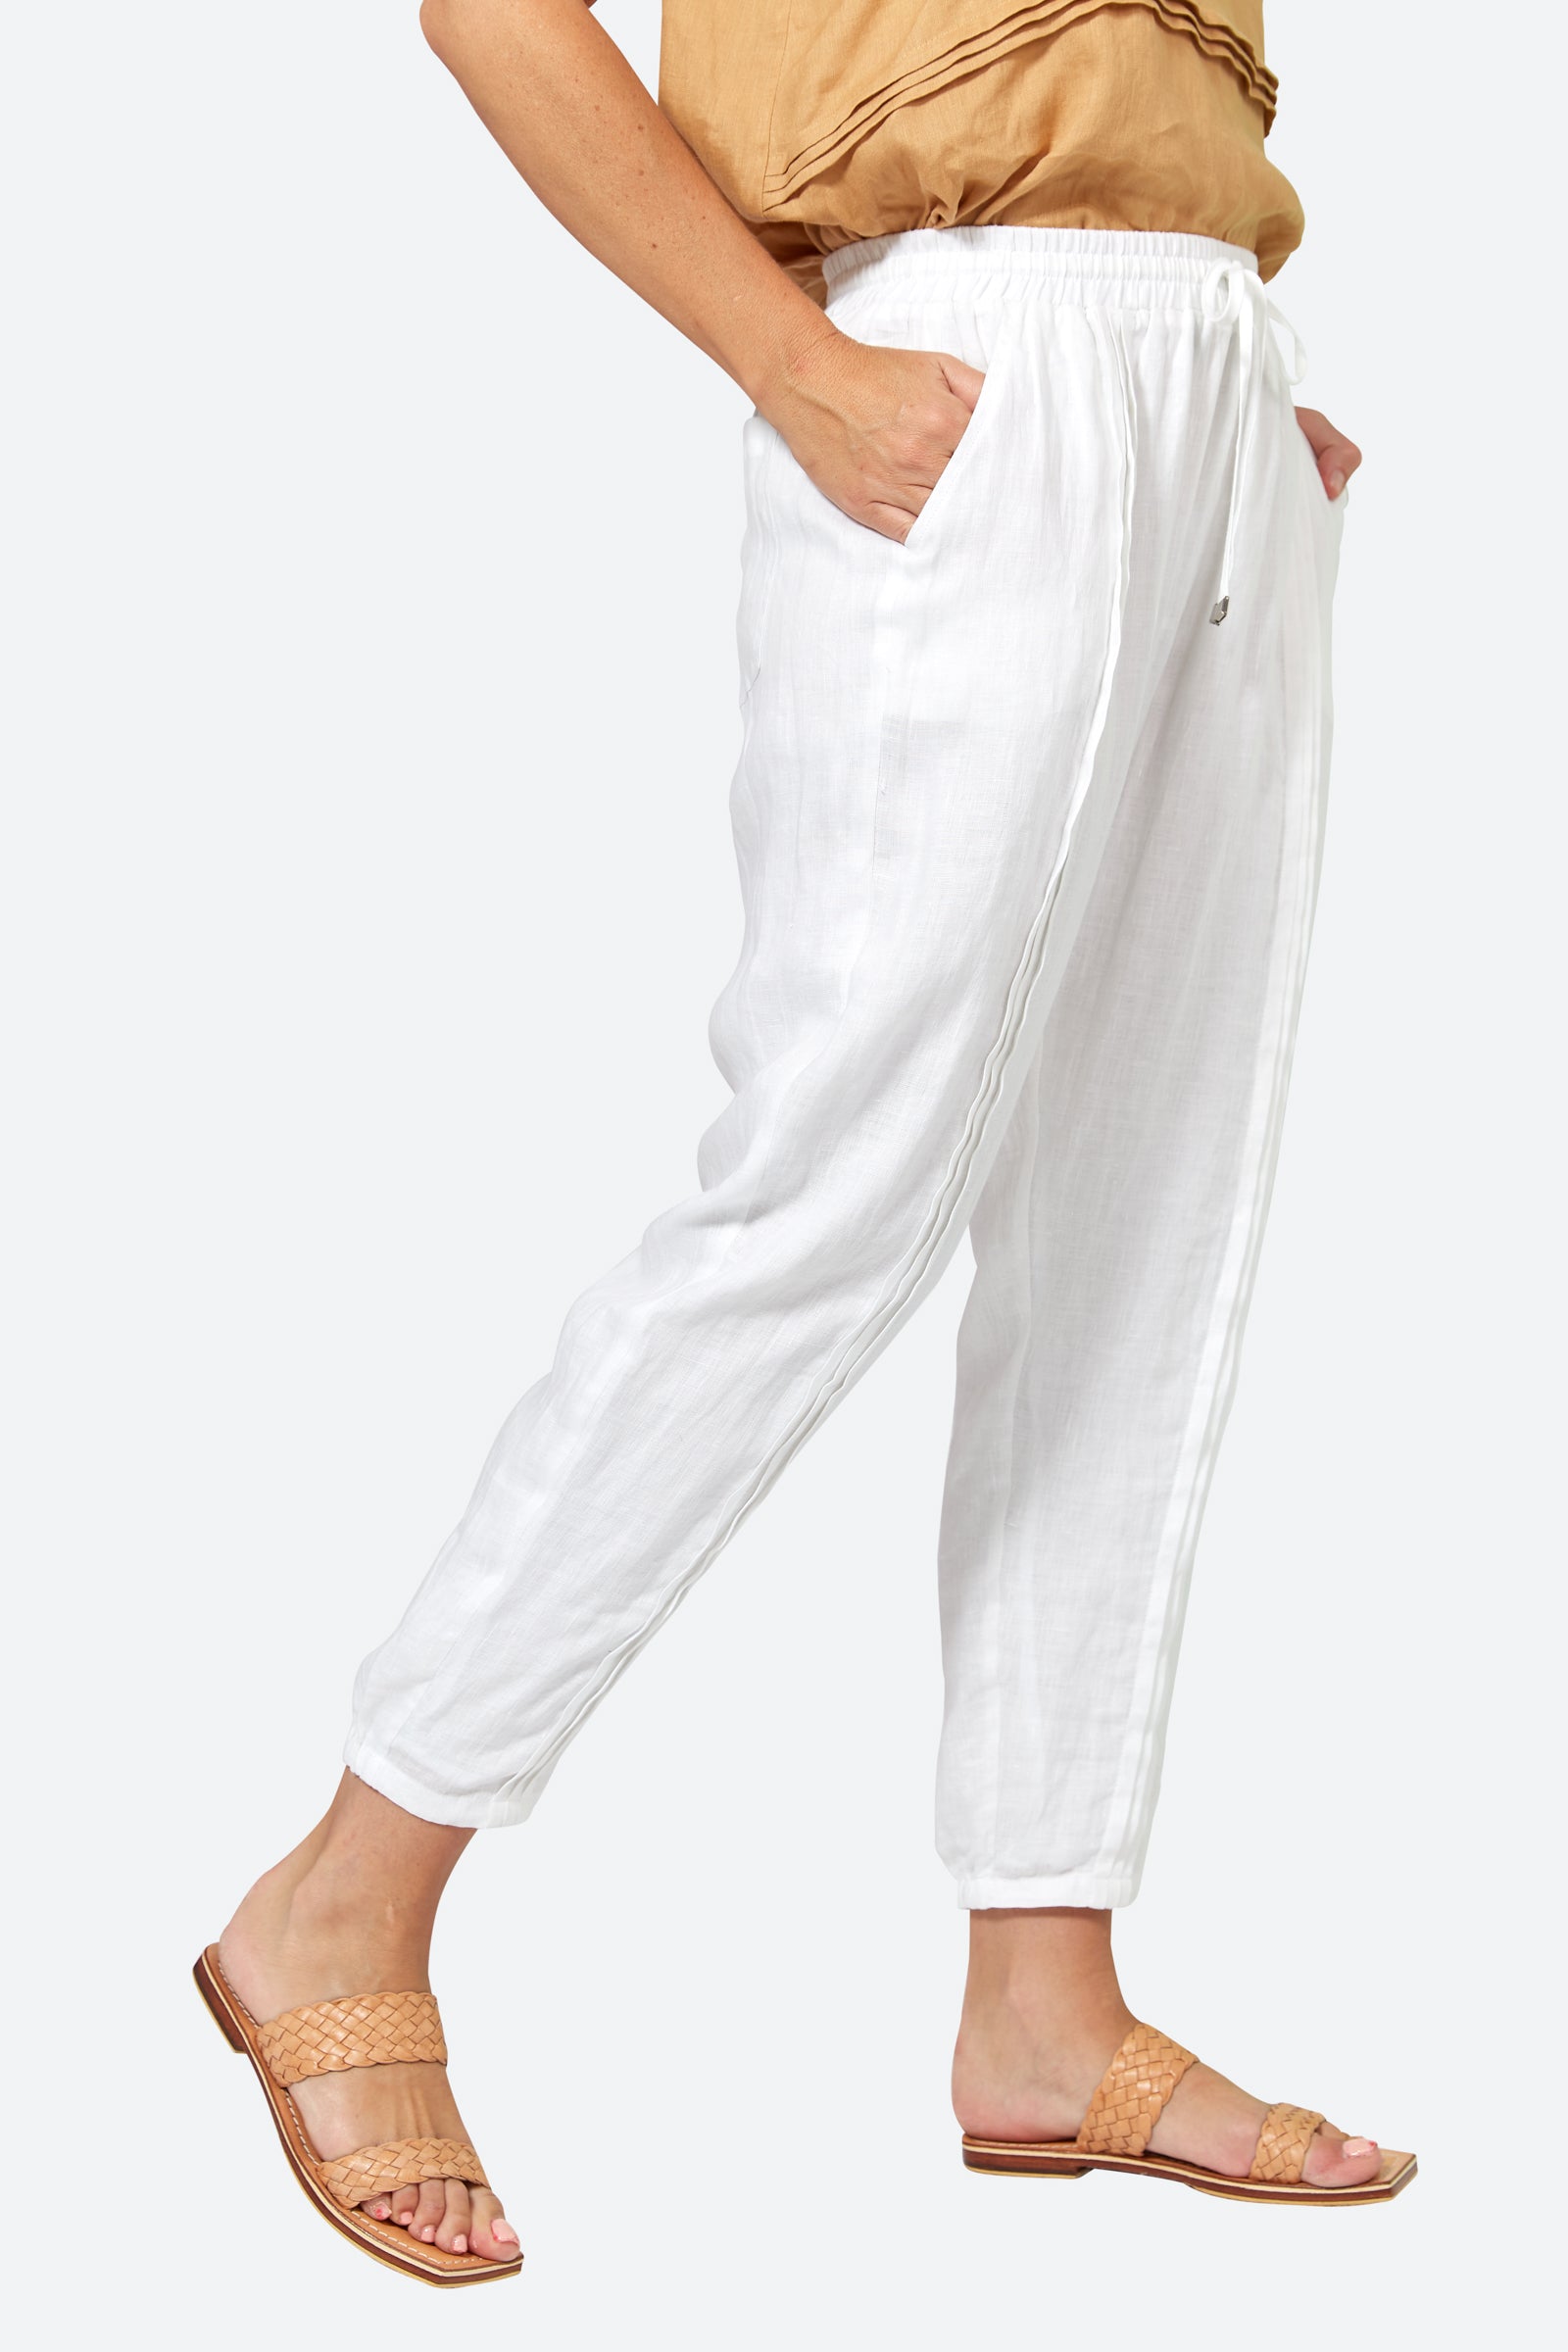 La Vie Pintuck Pant - Blanc - eb&ive Clothing - Pant Relaxed Linen